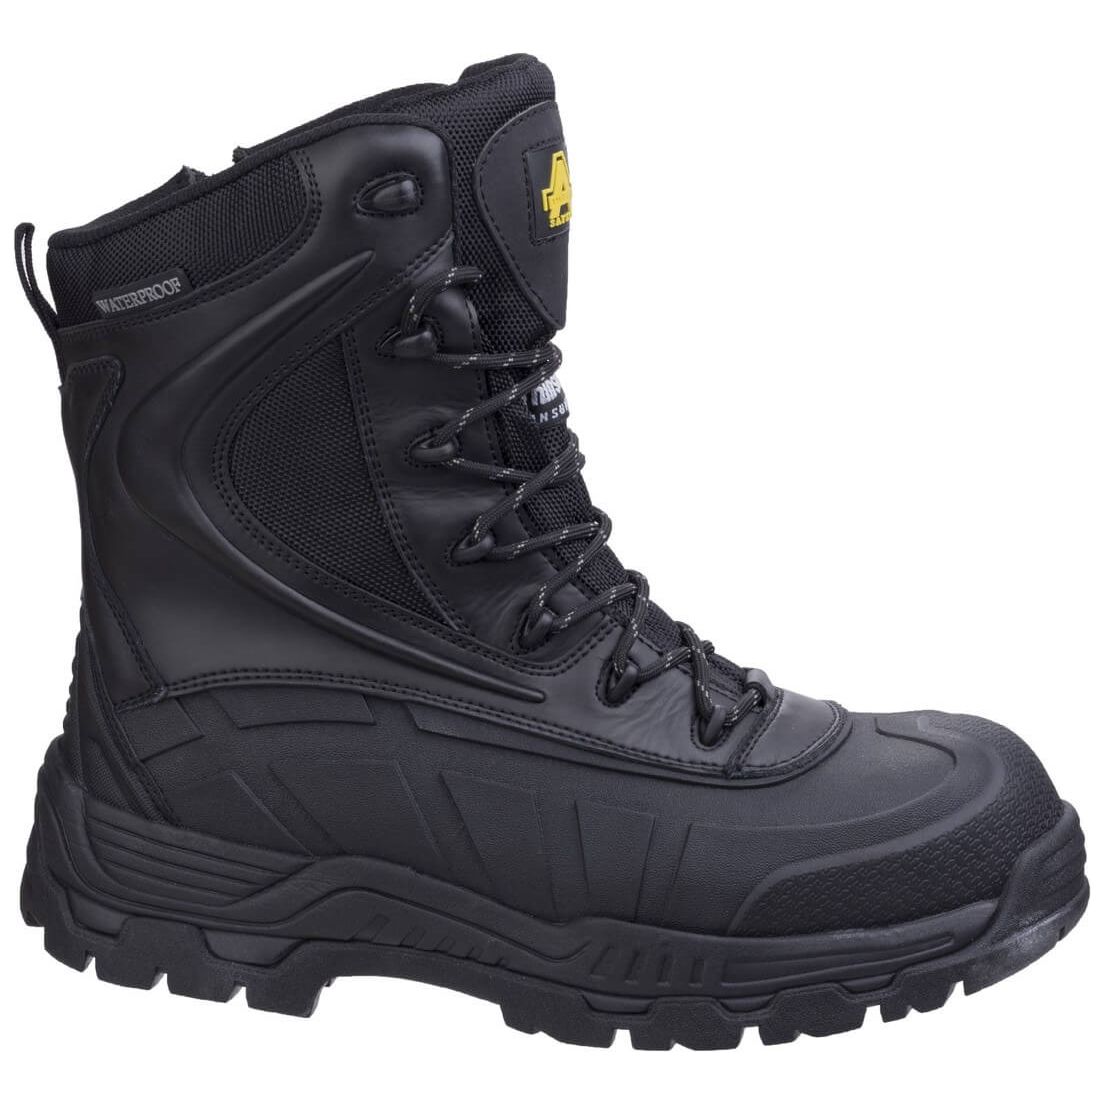 Amblers As440 Hybrid Metal-Free Waterproof Safety Boots Womens - workweargurus.com